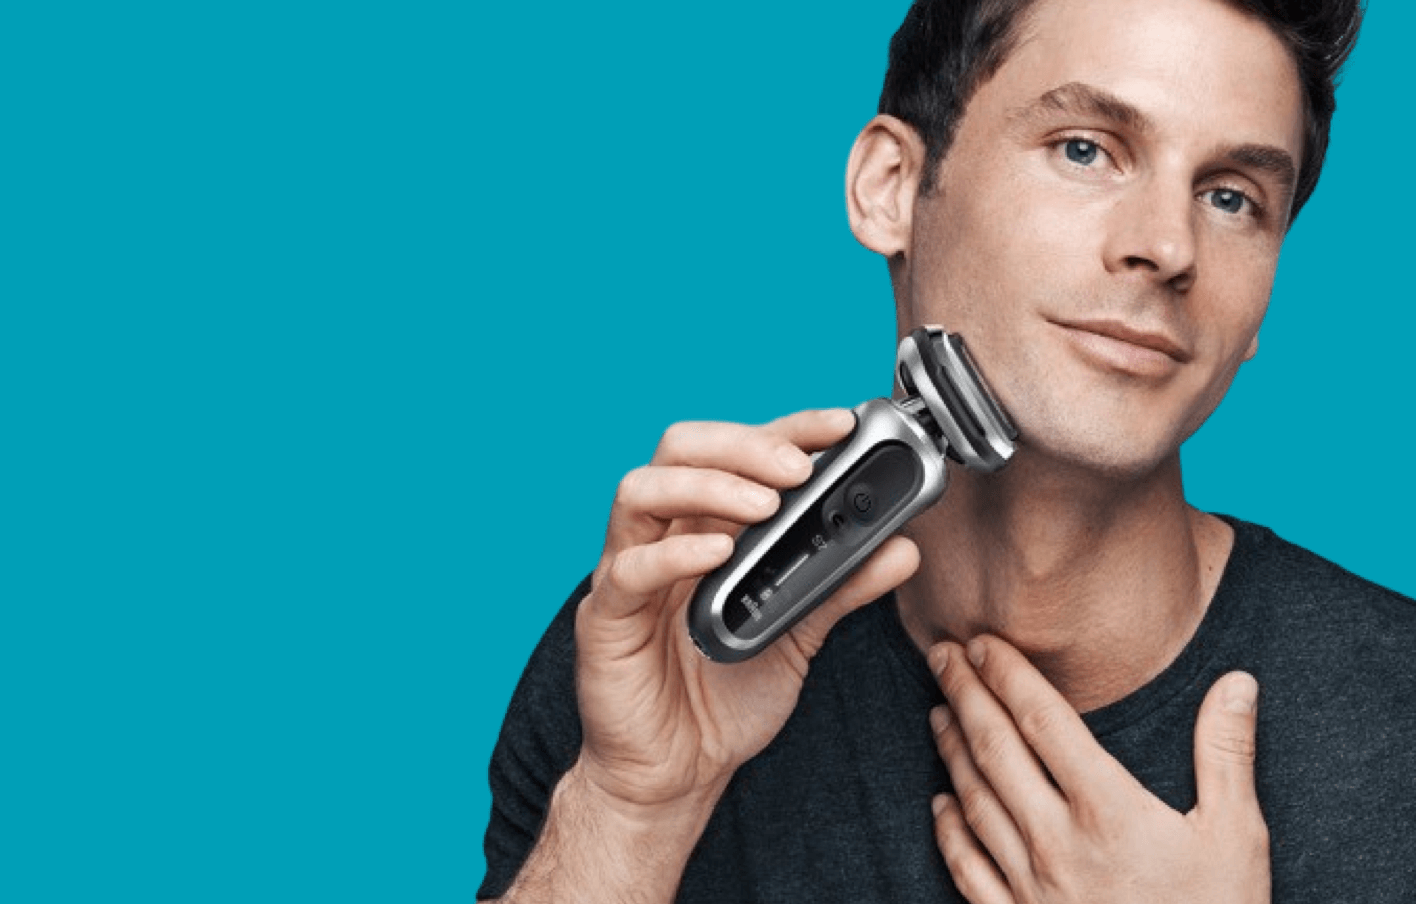 Braun Shaving Machine for Men's Grooming